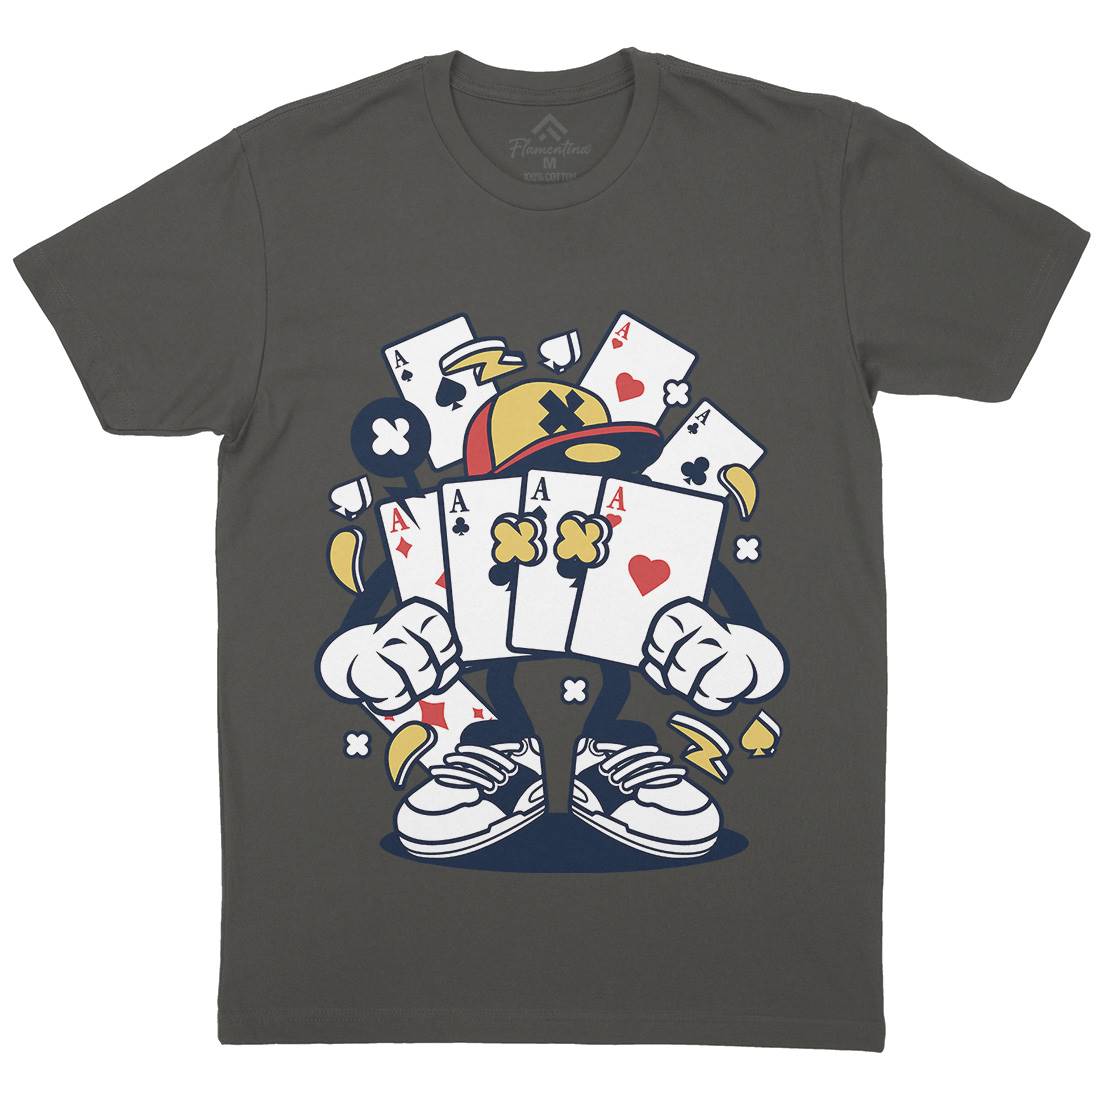 Playing Card Mens Organic Crew Neck T-Shirt Sport C193